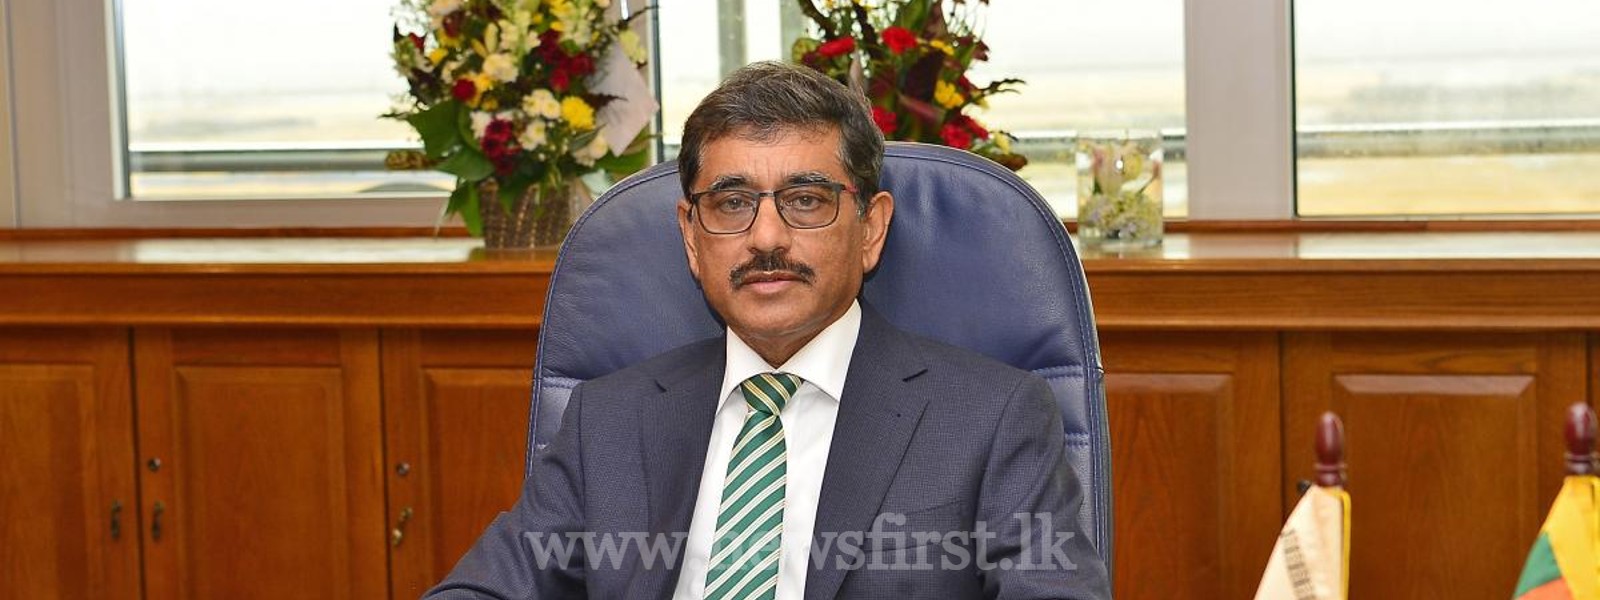 Sri Lanka has decided to go into “Pre-emptive negotiated default”: CBSL Governor